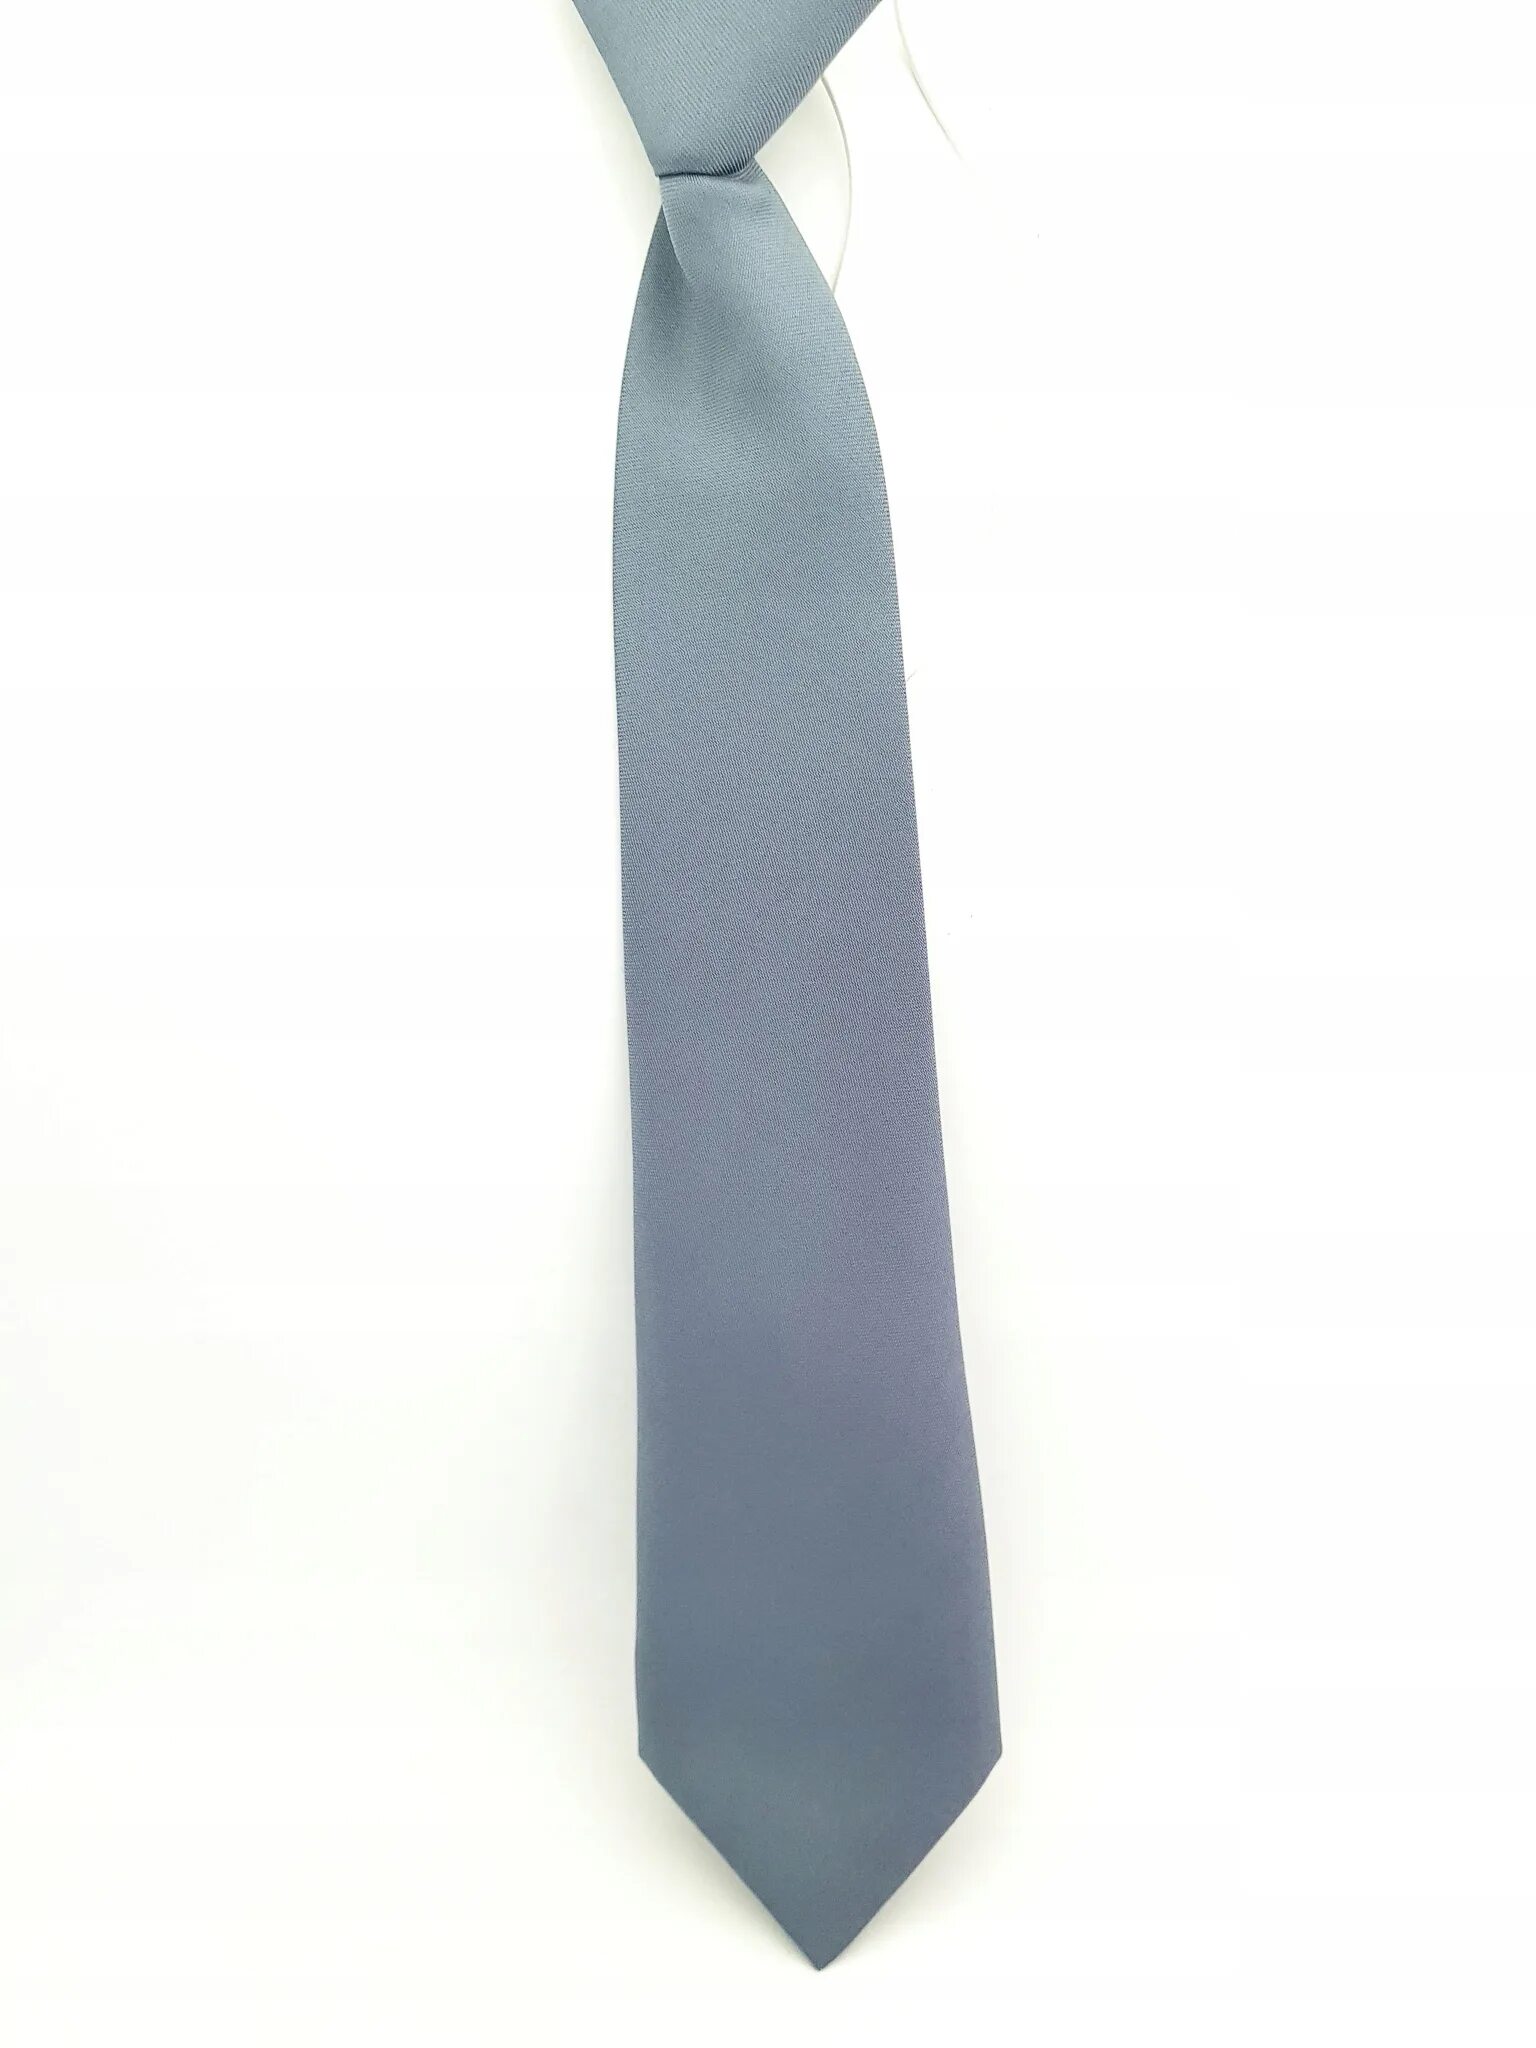 Серый галстук. Галстук на резинке. Галстук серый однотонный. Галстук серо-голубой.